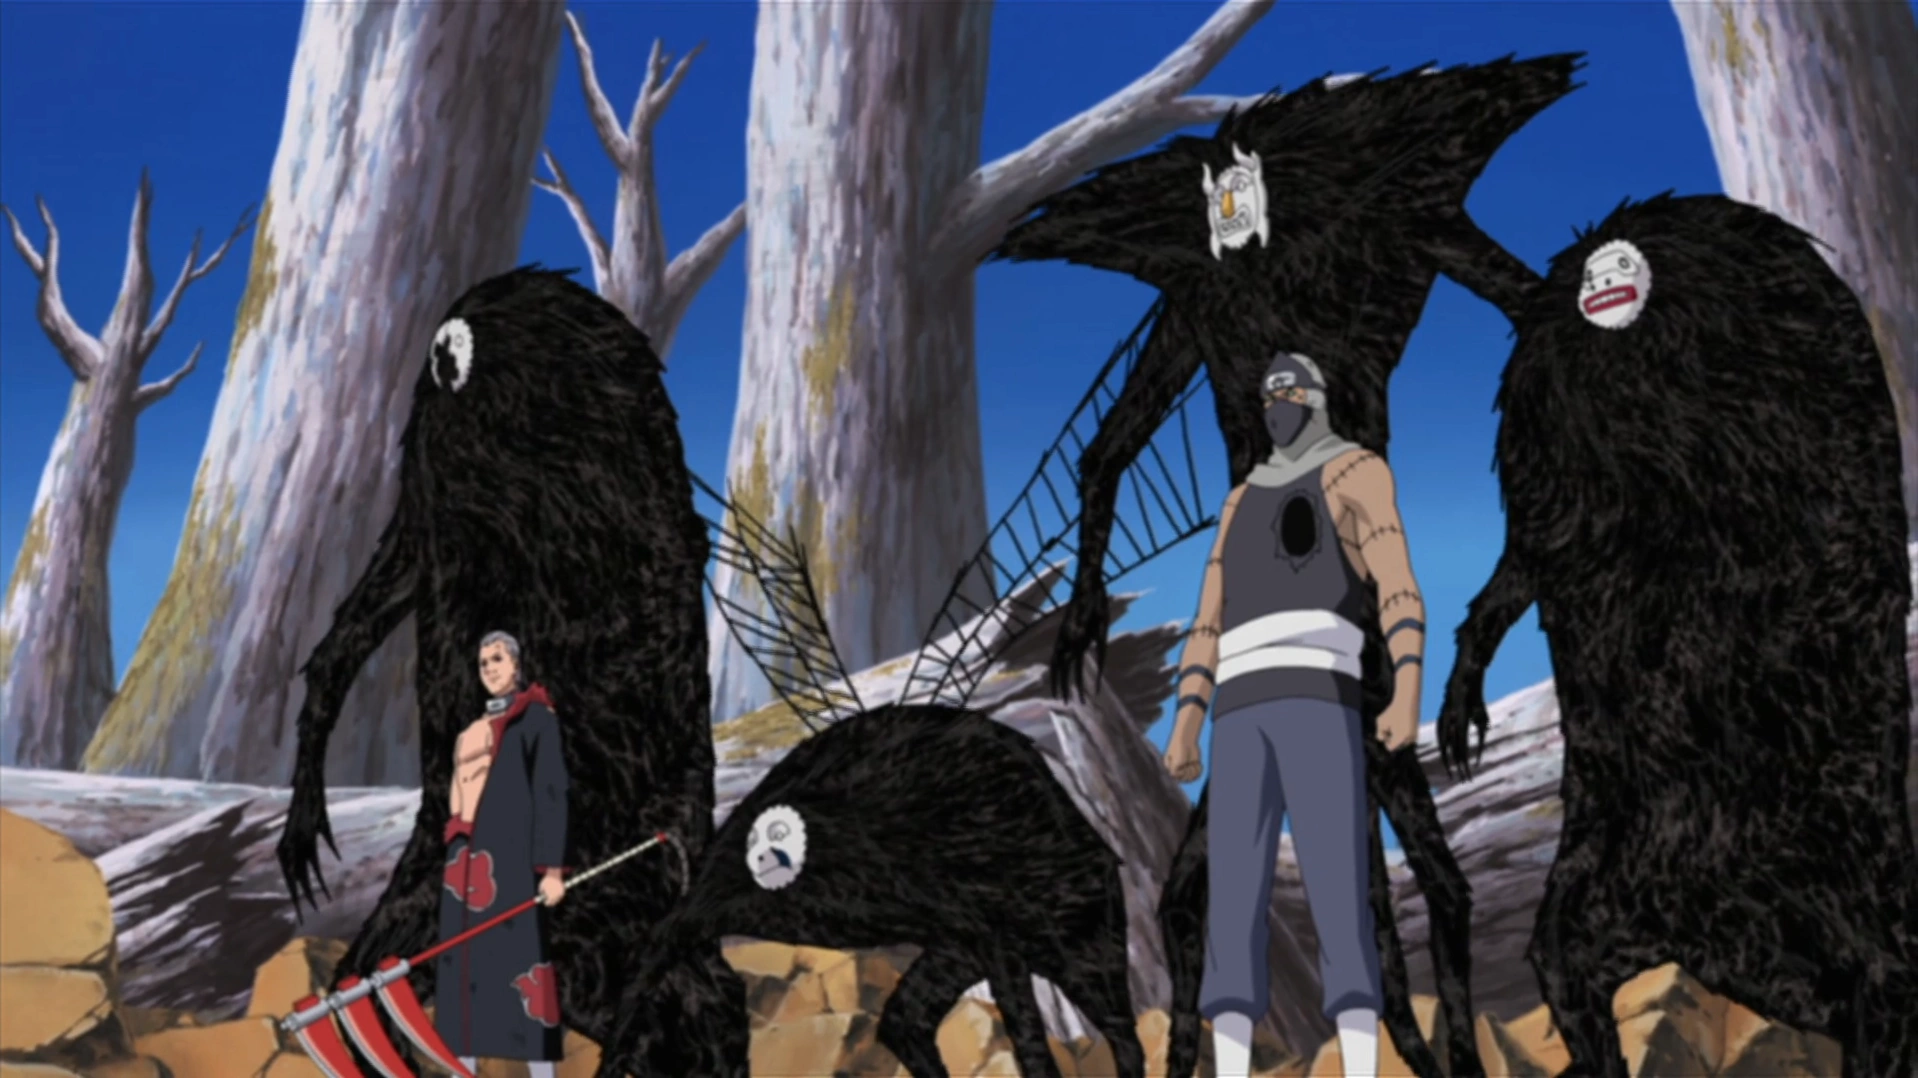 Hidan and Kakuzu against Asuma's Team in Naruto Shippuden